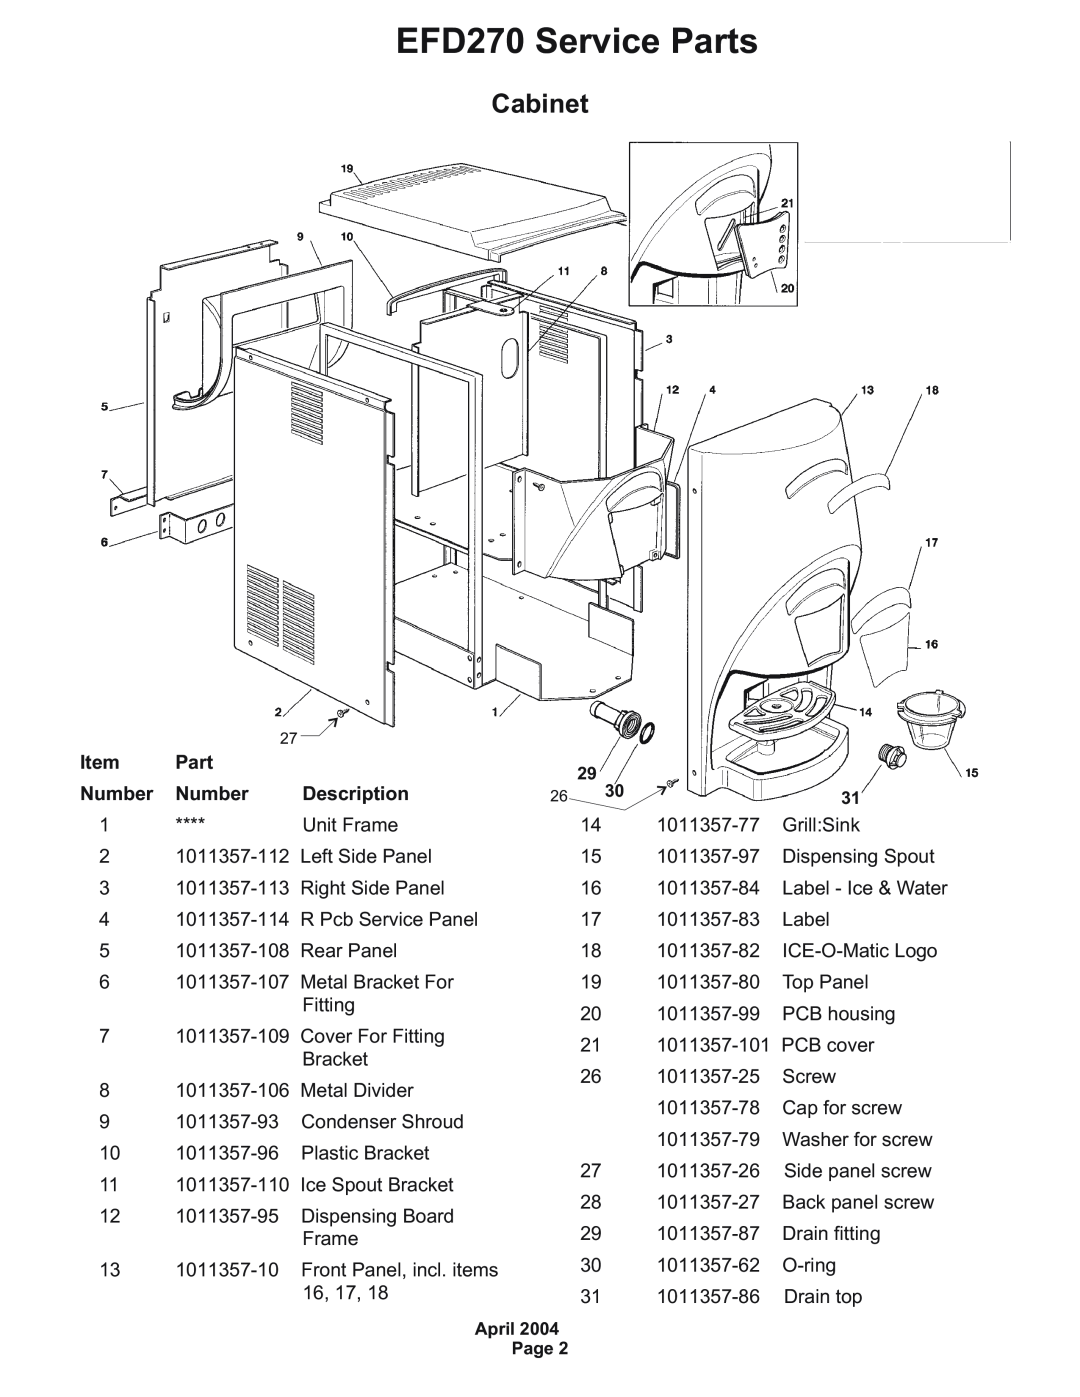 Ice-O-Matic manual Cabinet, Number, Description, EFD270 Service Parts 